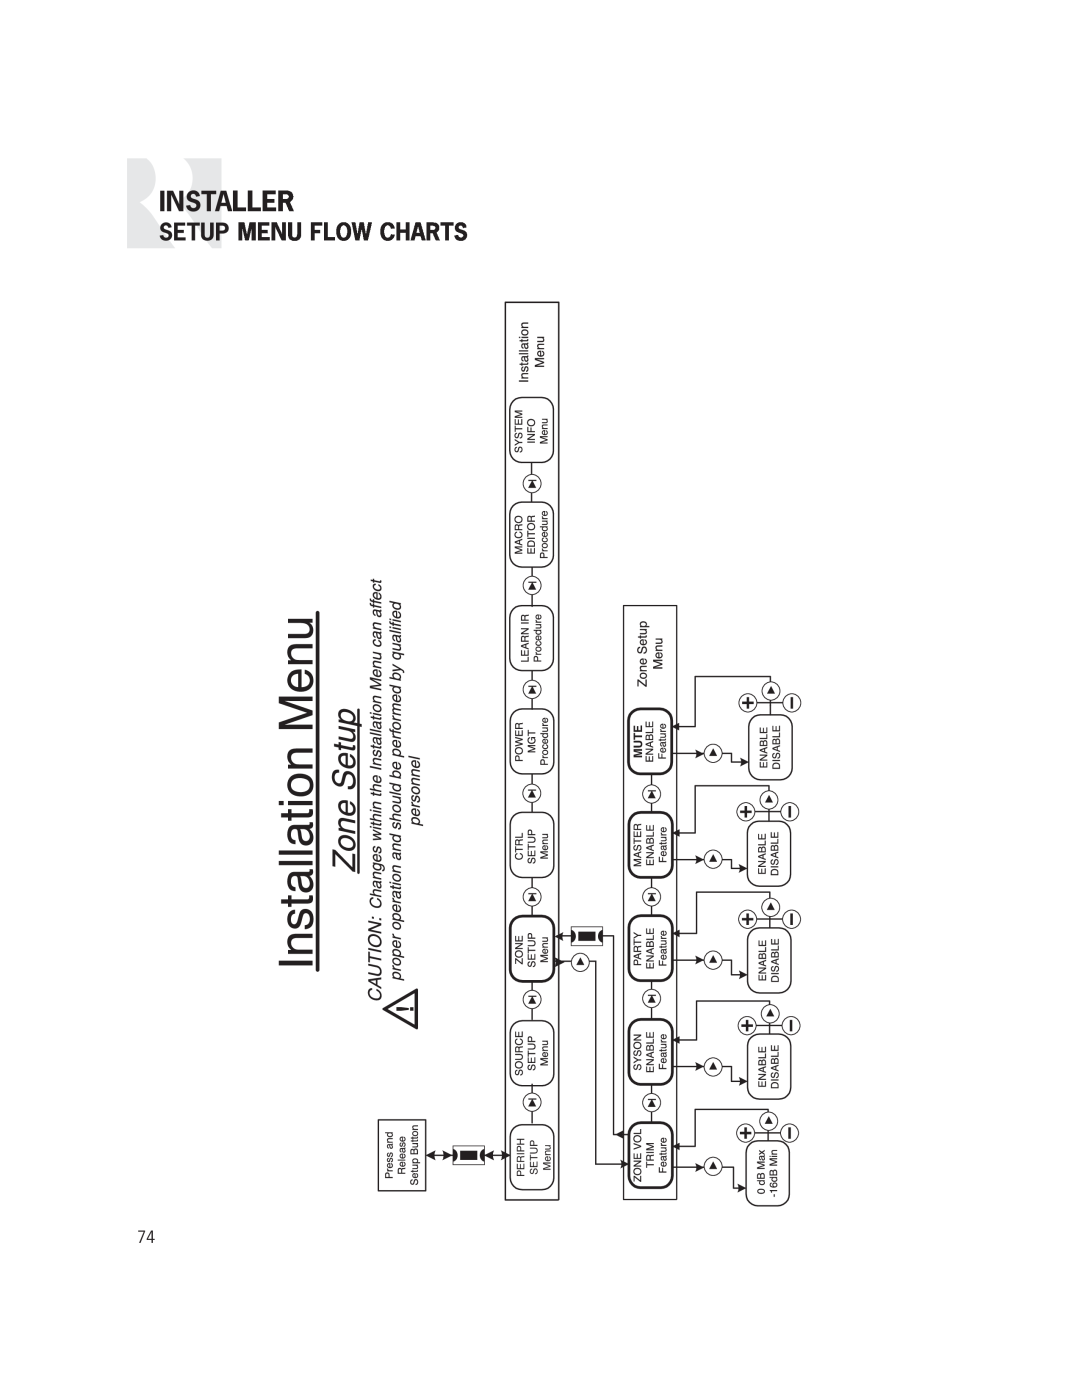 Russound CAM6.6X-S1/S2 instruction manual Installer, Setup Menu Flow Charts, Mute 